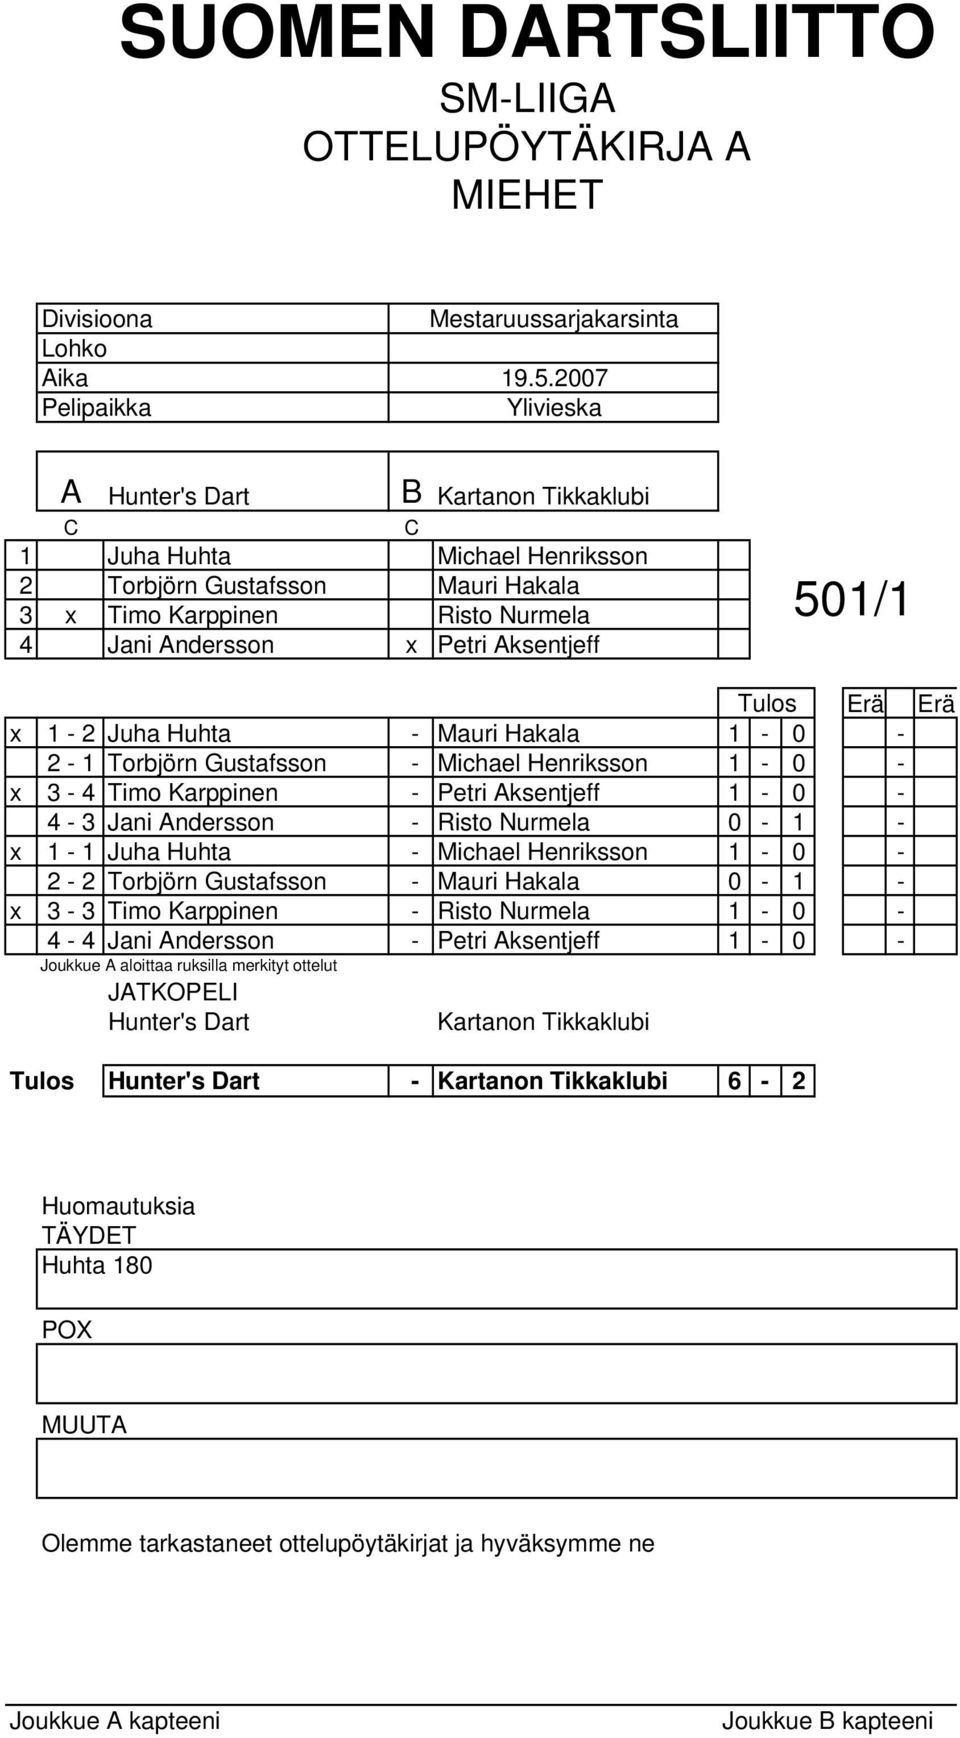 Karppinen - Petri ksentjeff 1-0 - 4-3 Jani ndersson - Risto Nurmela 0-1 - x 1-1 Juha Huhta - Michael Henriksson 1-0 - 2-2 Torbjörn Gustafsson - Mauri Hakala 0-1 - x